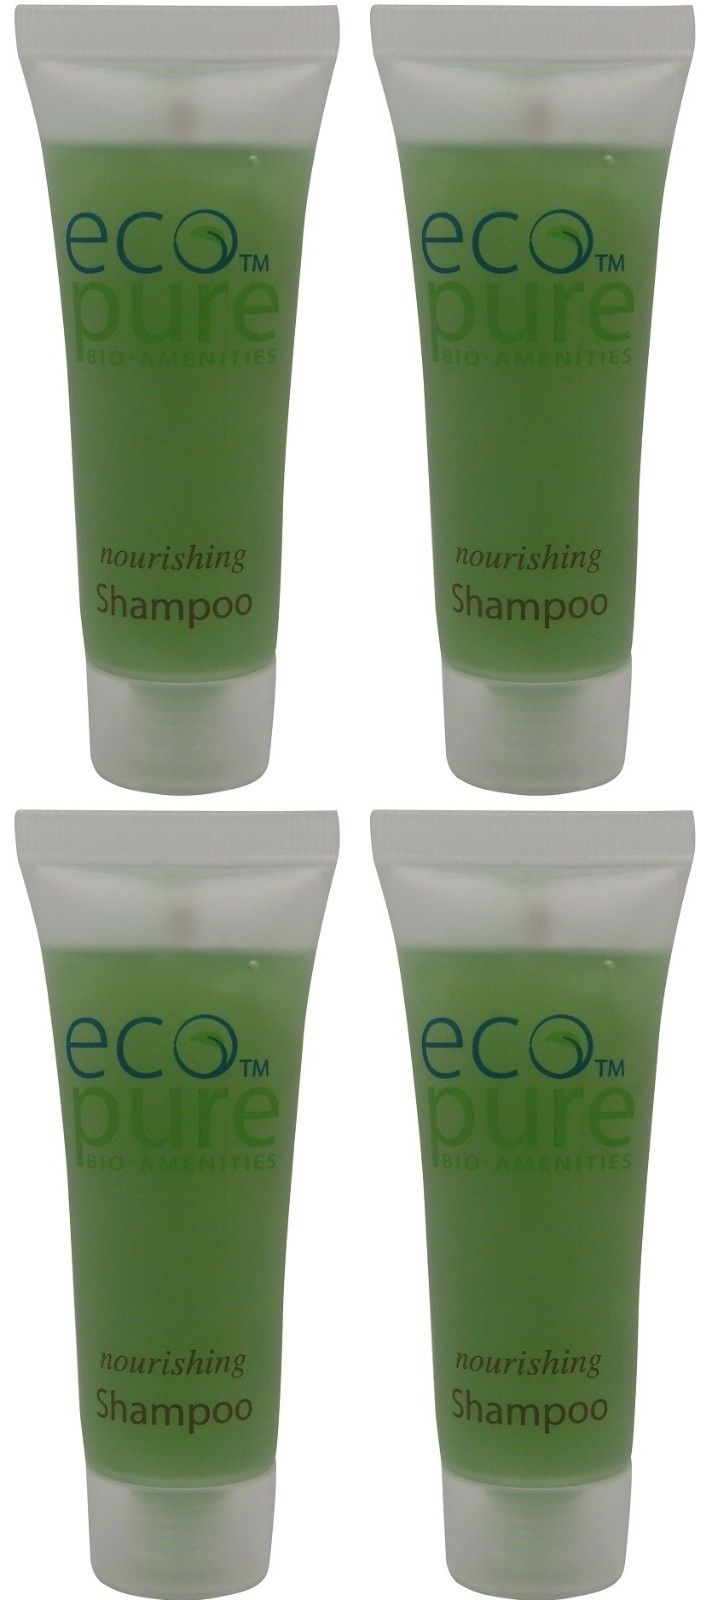 Eco Pure Nourishing Shampoo Lot of 4 each 1oz Bottles. Total of 4oz